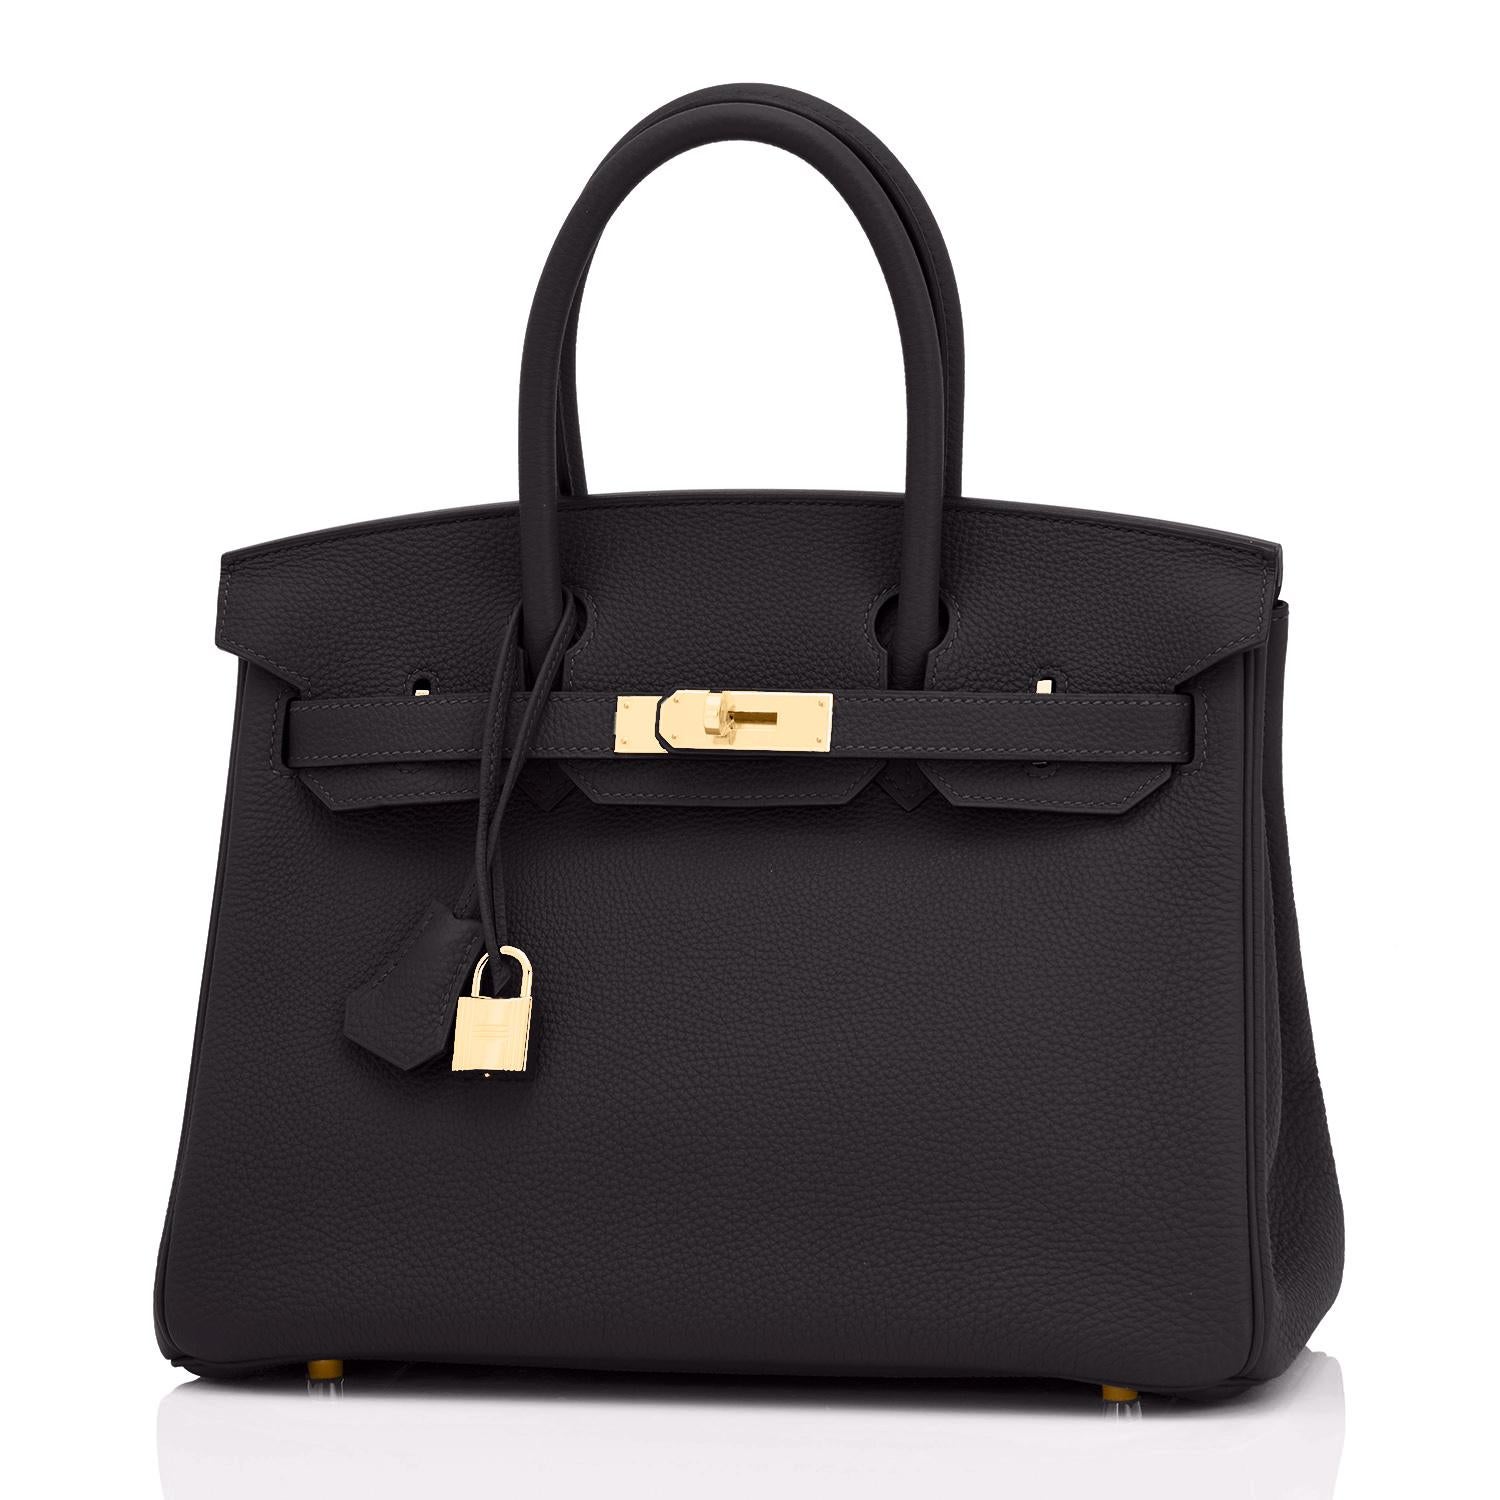 Hermes Birkin 30cm Black Togo Gold Hardware Bag  In New Condition For Sale In New York, NY